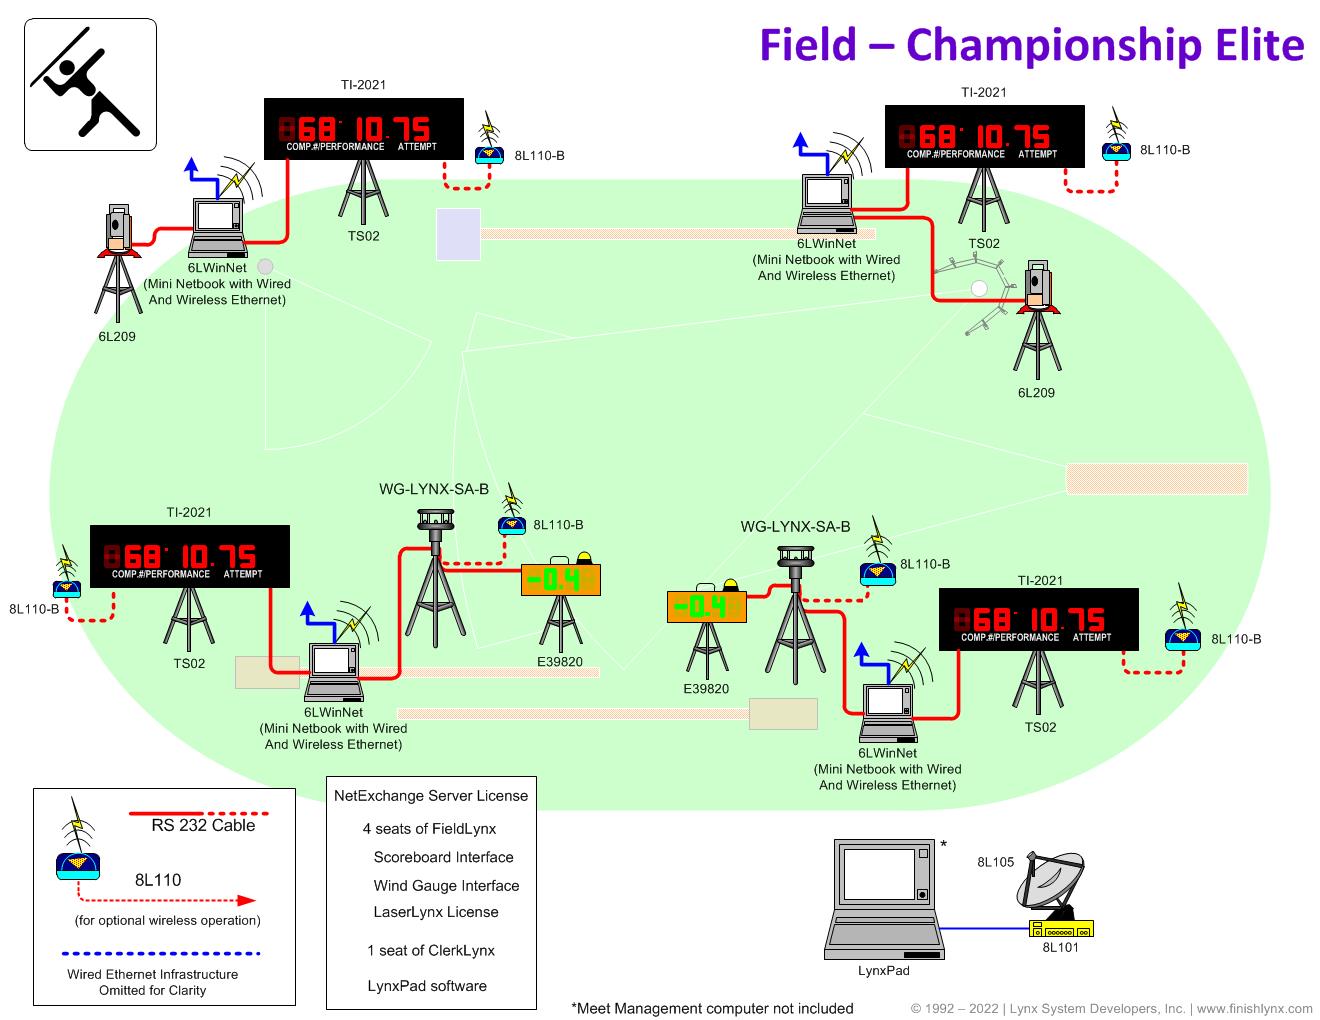 Field - Championship Elite